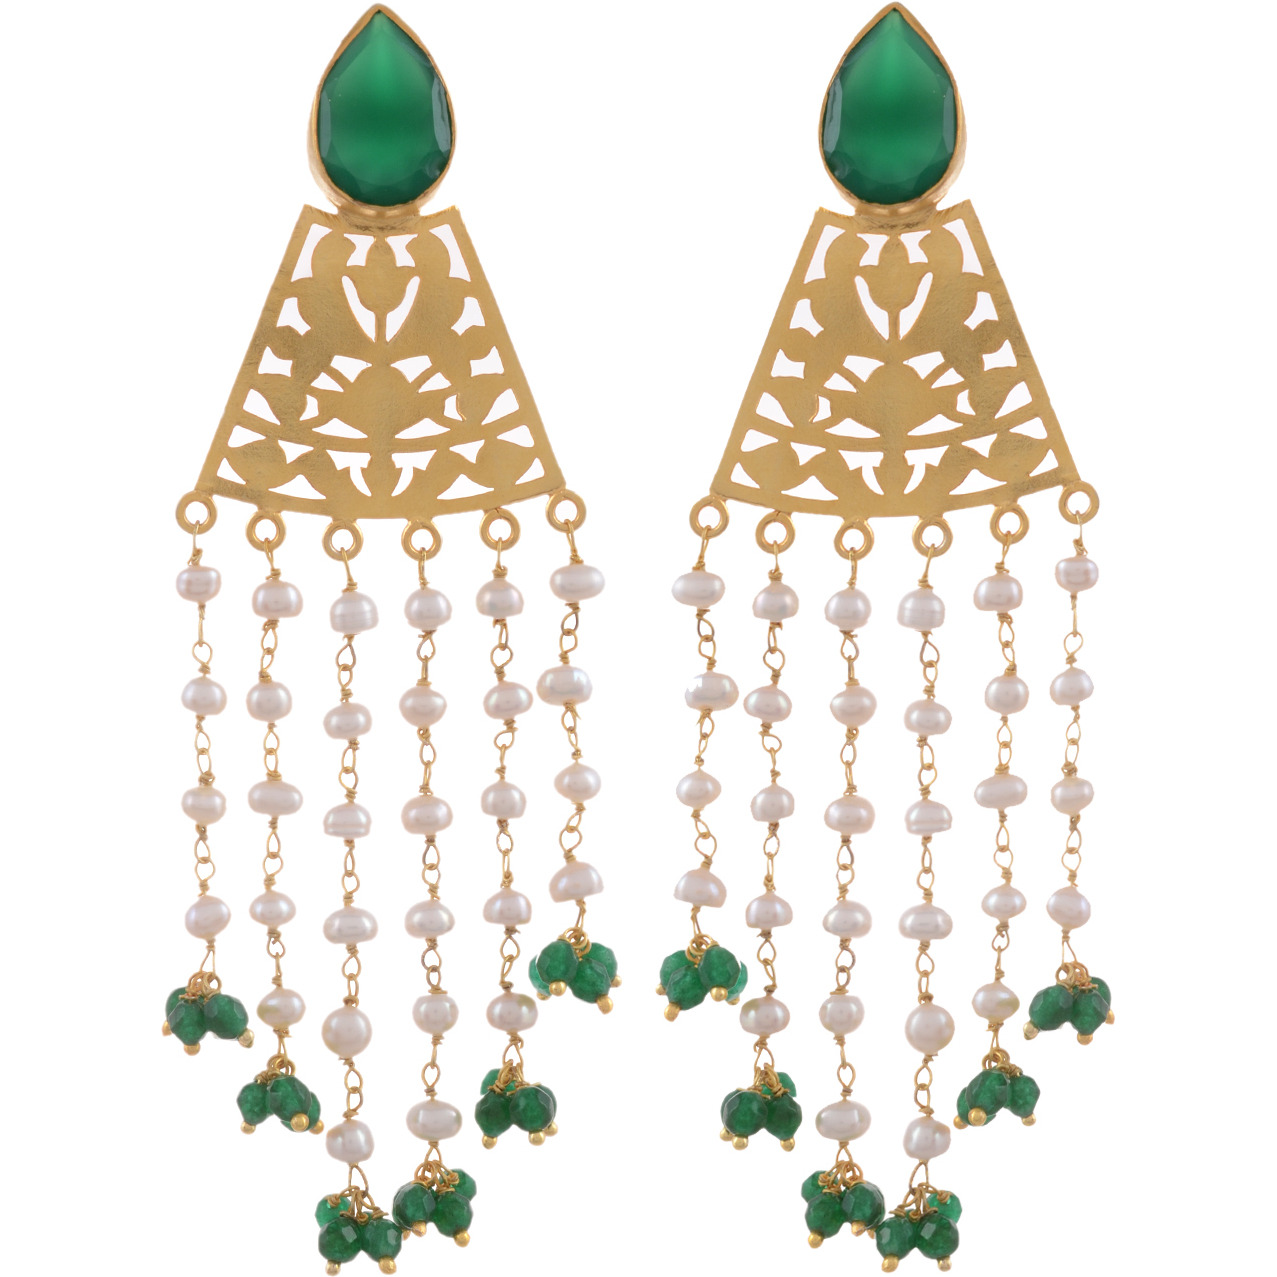 Gold Plated, Green Oynx, Fresh Water Pearls Beautiful Drop Earrings By Silvermerc Designs